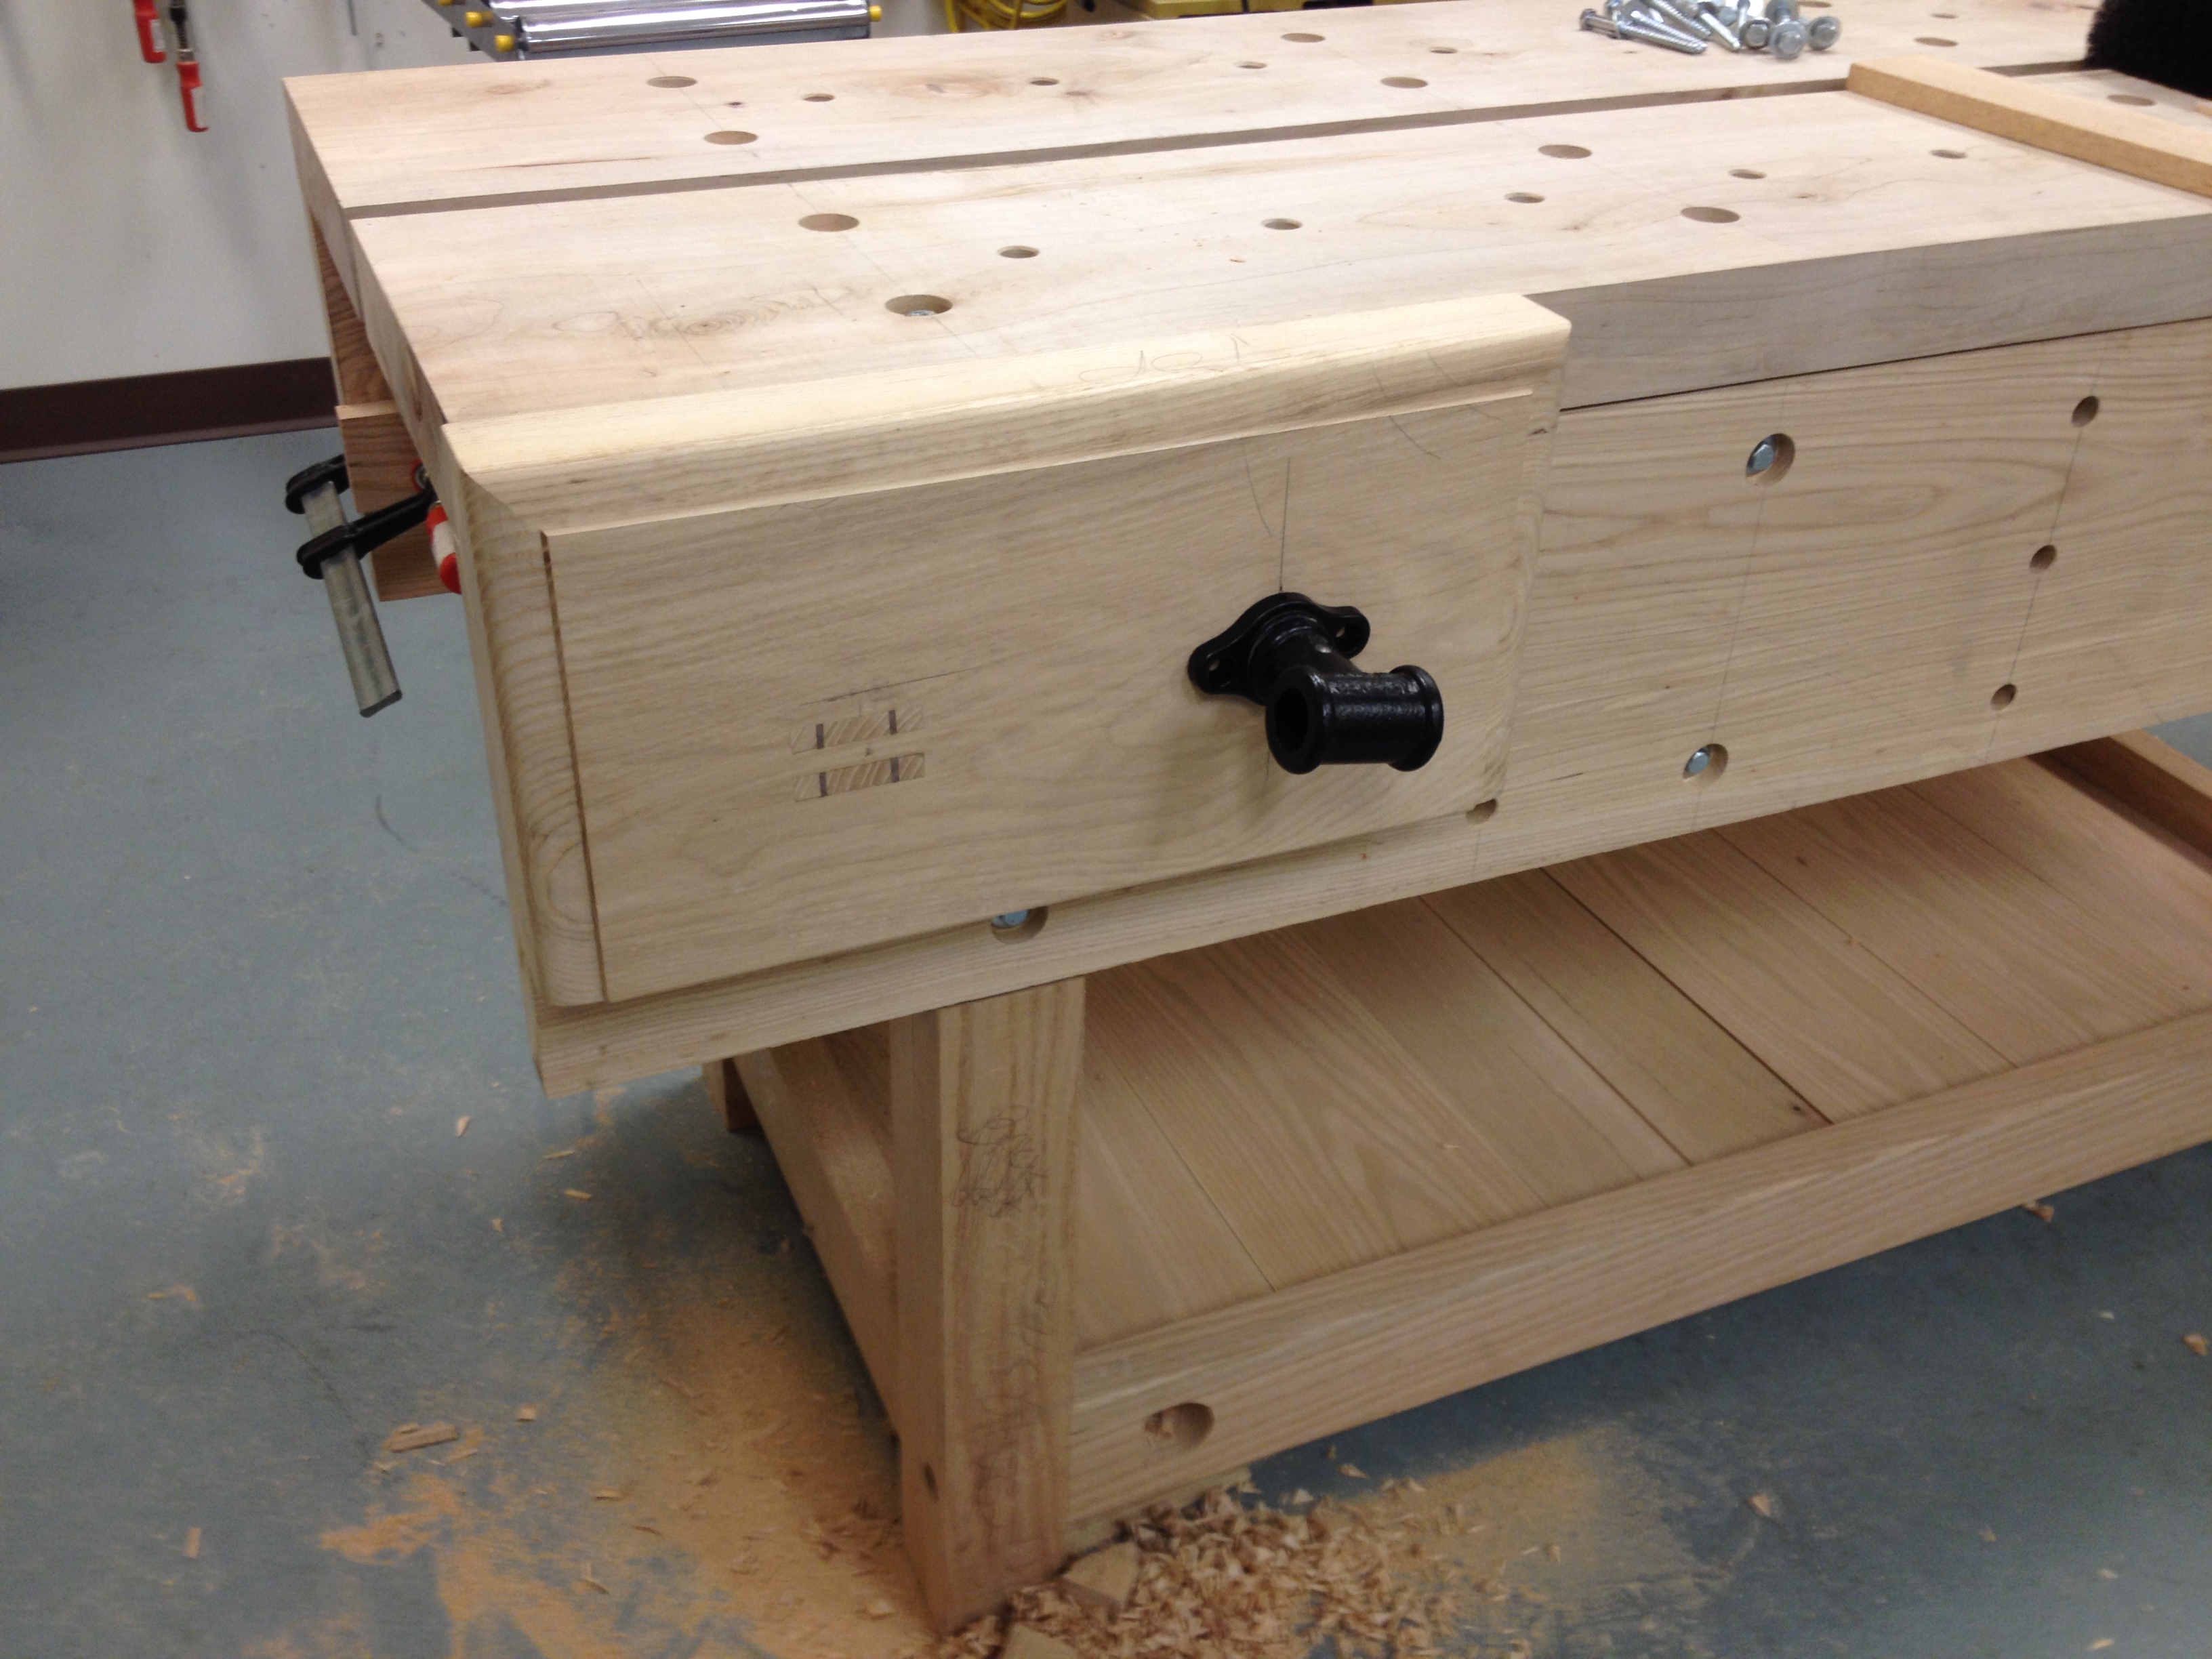 Nicholson Woodworking Bench diy harvest table plans Building PDF Plans ...